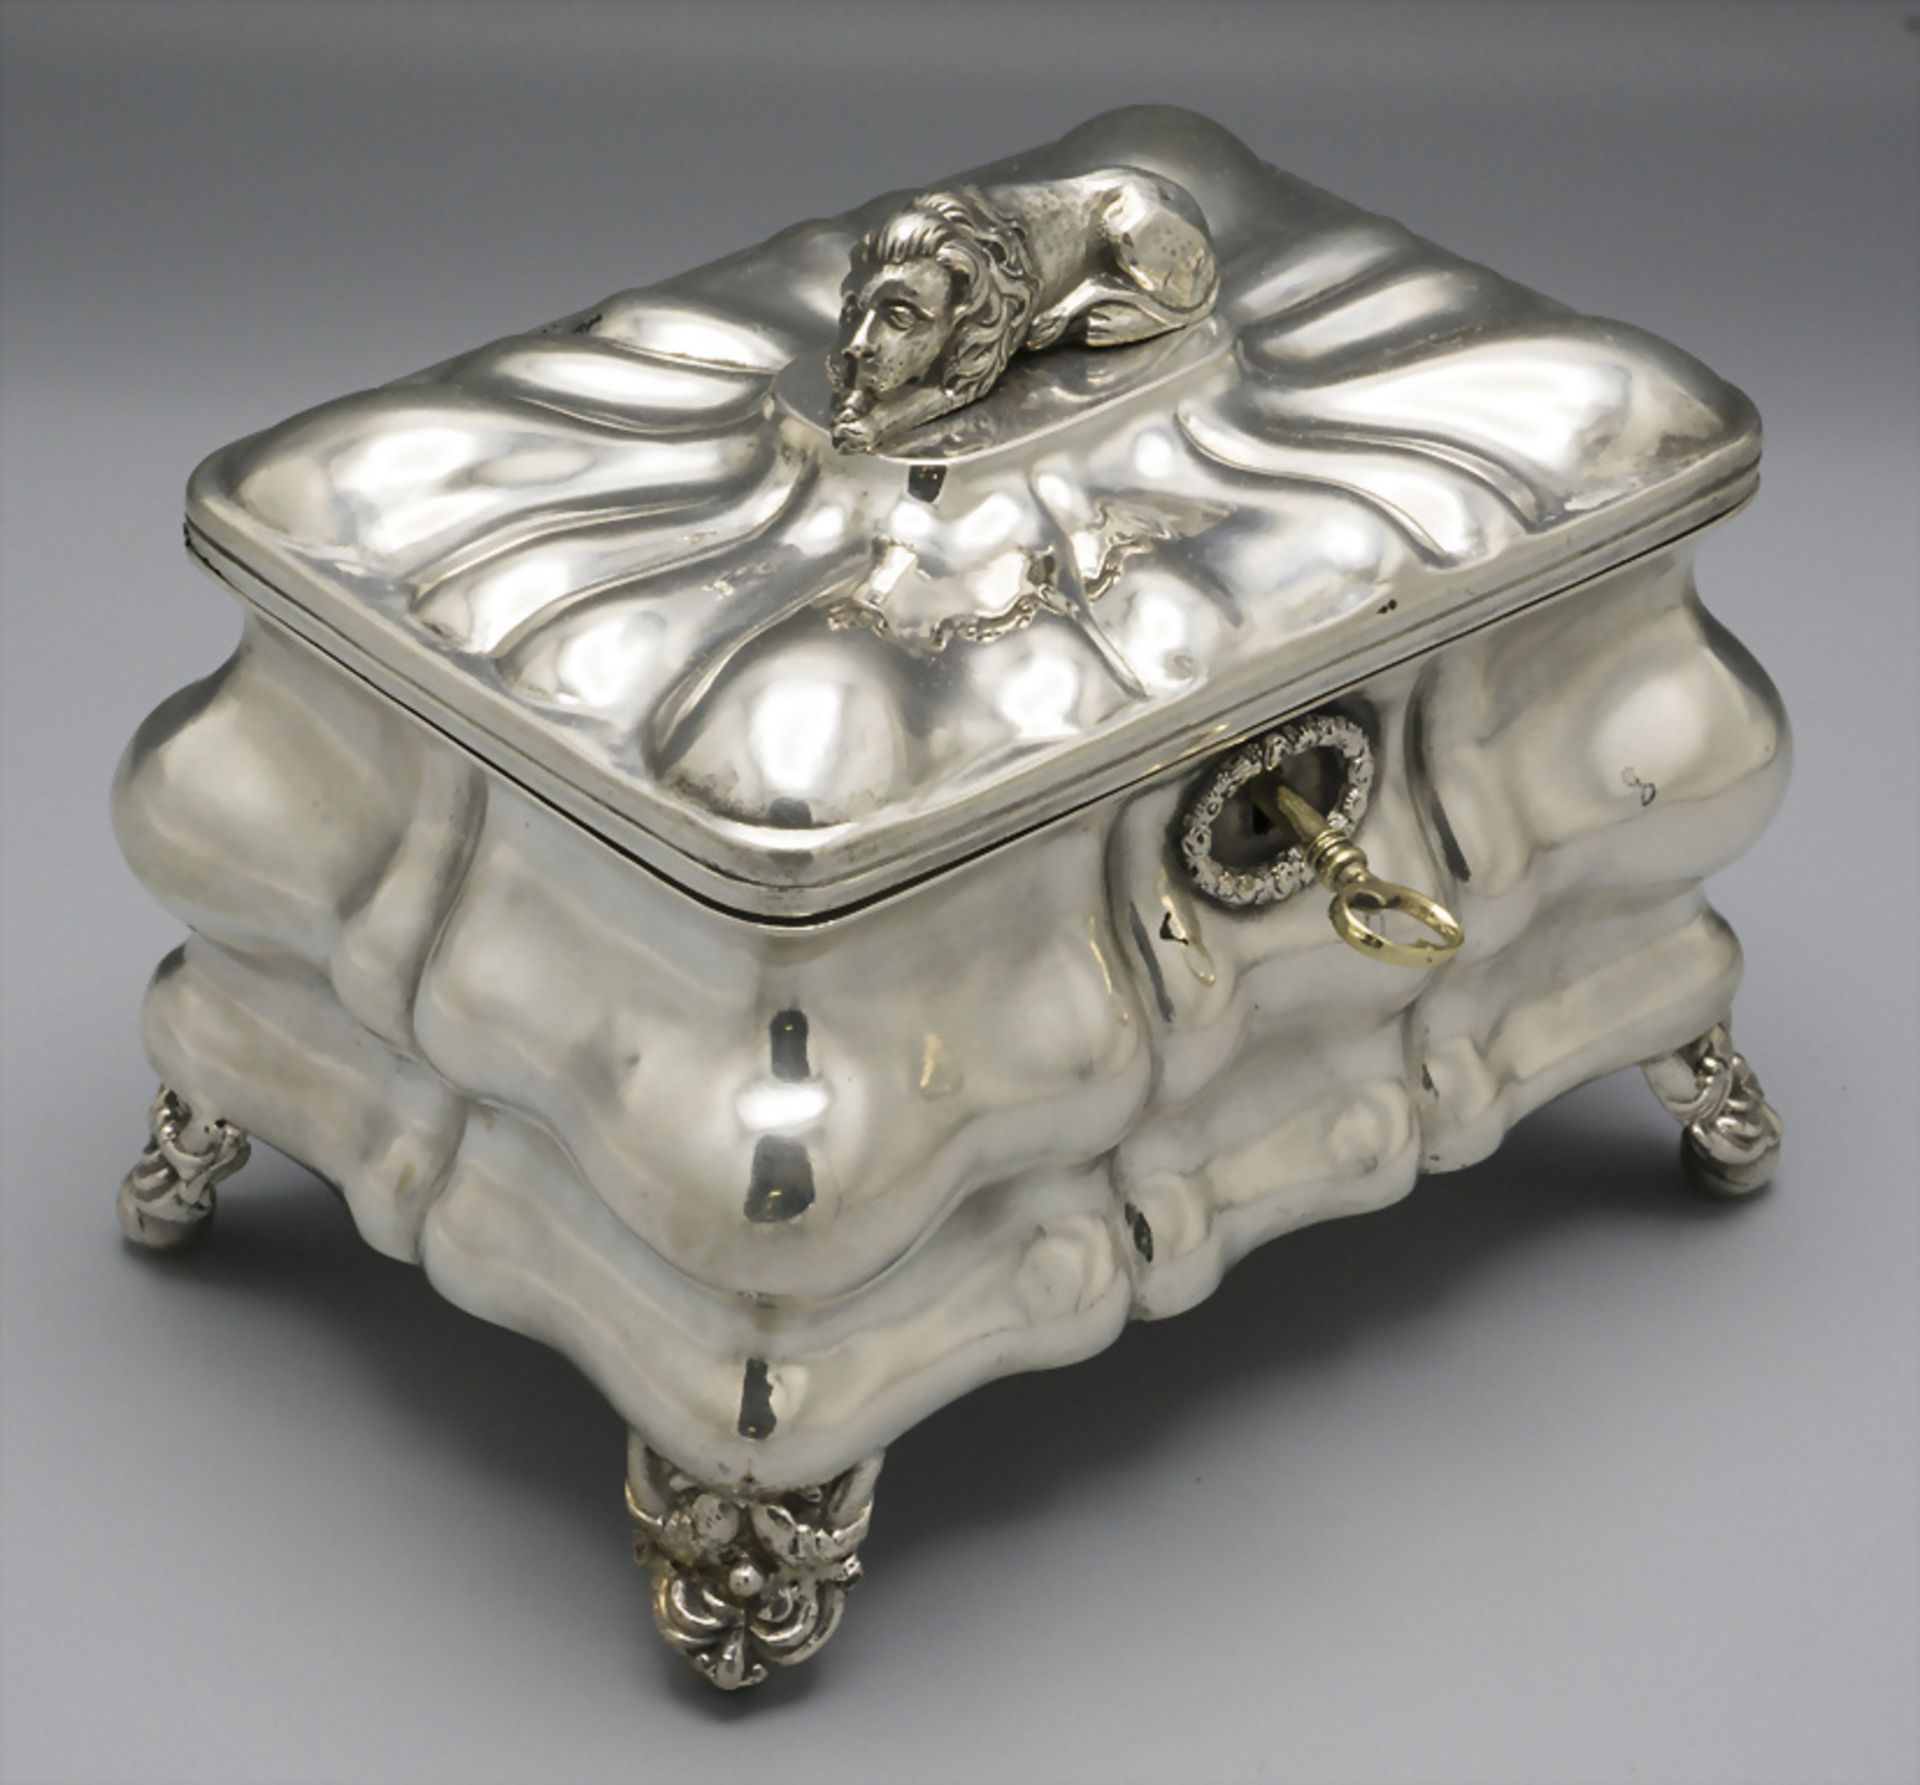 Biedermeier Zuckerdose / A silver Biedermeier sugar bowl, Peter Schima, Wien, um 1847 - Image 2 of 7